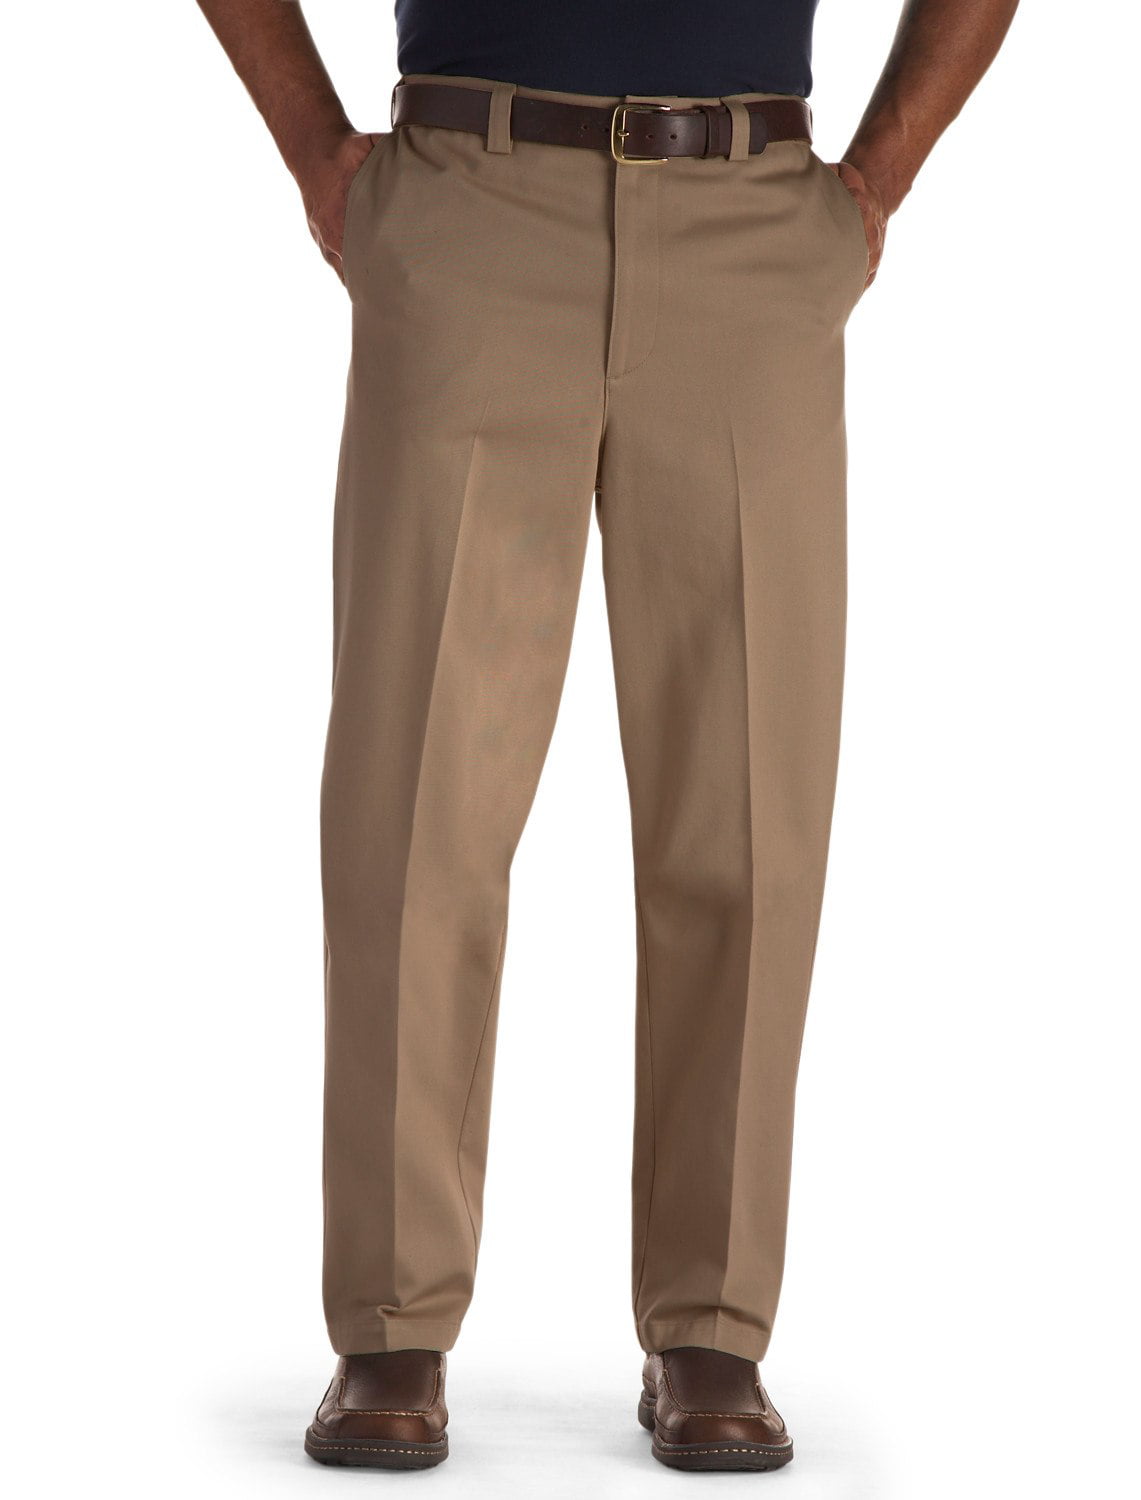 Oak Hill by DXL Big and Tall Flat-Front Premium Stretch Twill Pants